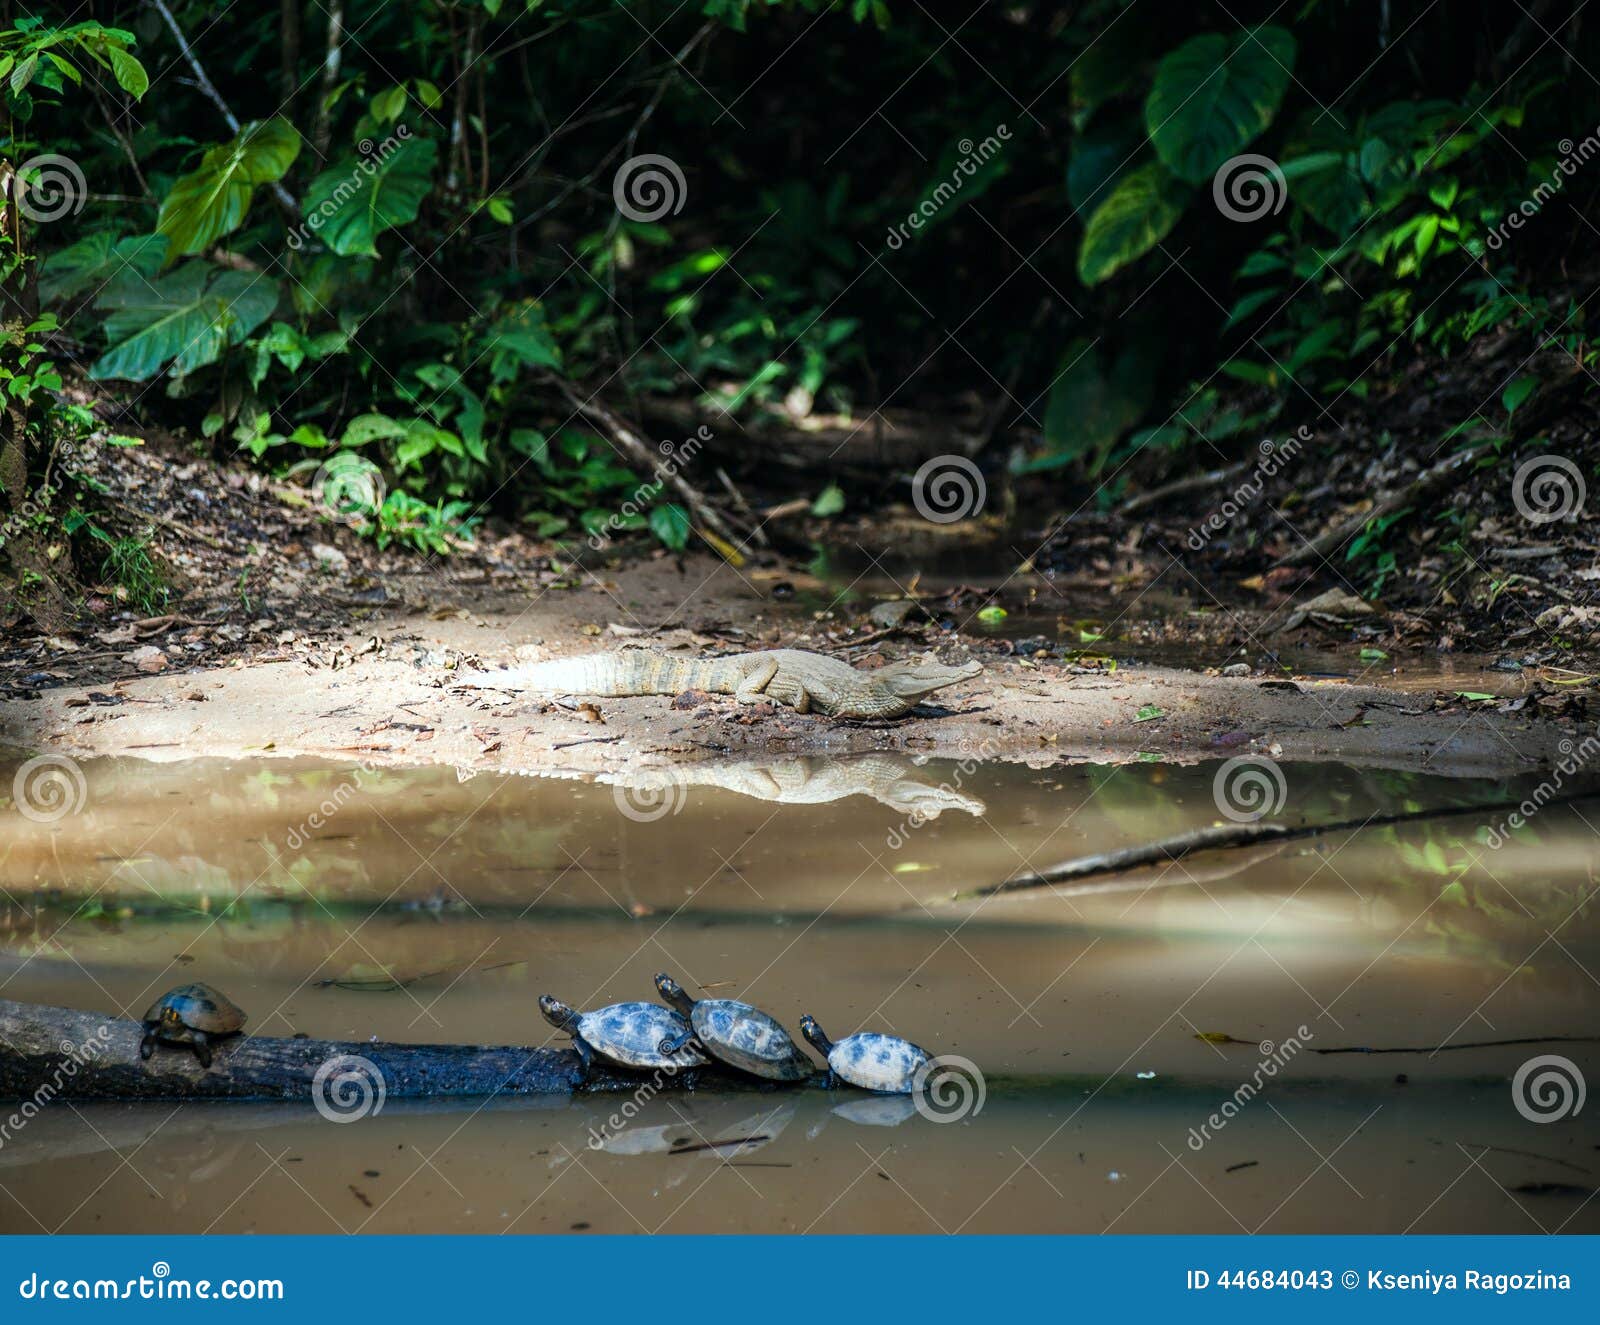 wild cayman and turtles in ecuadorian amazonia, misahualli